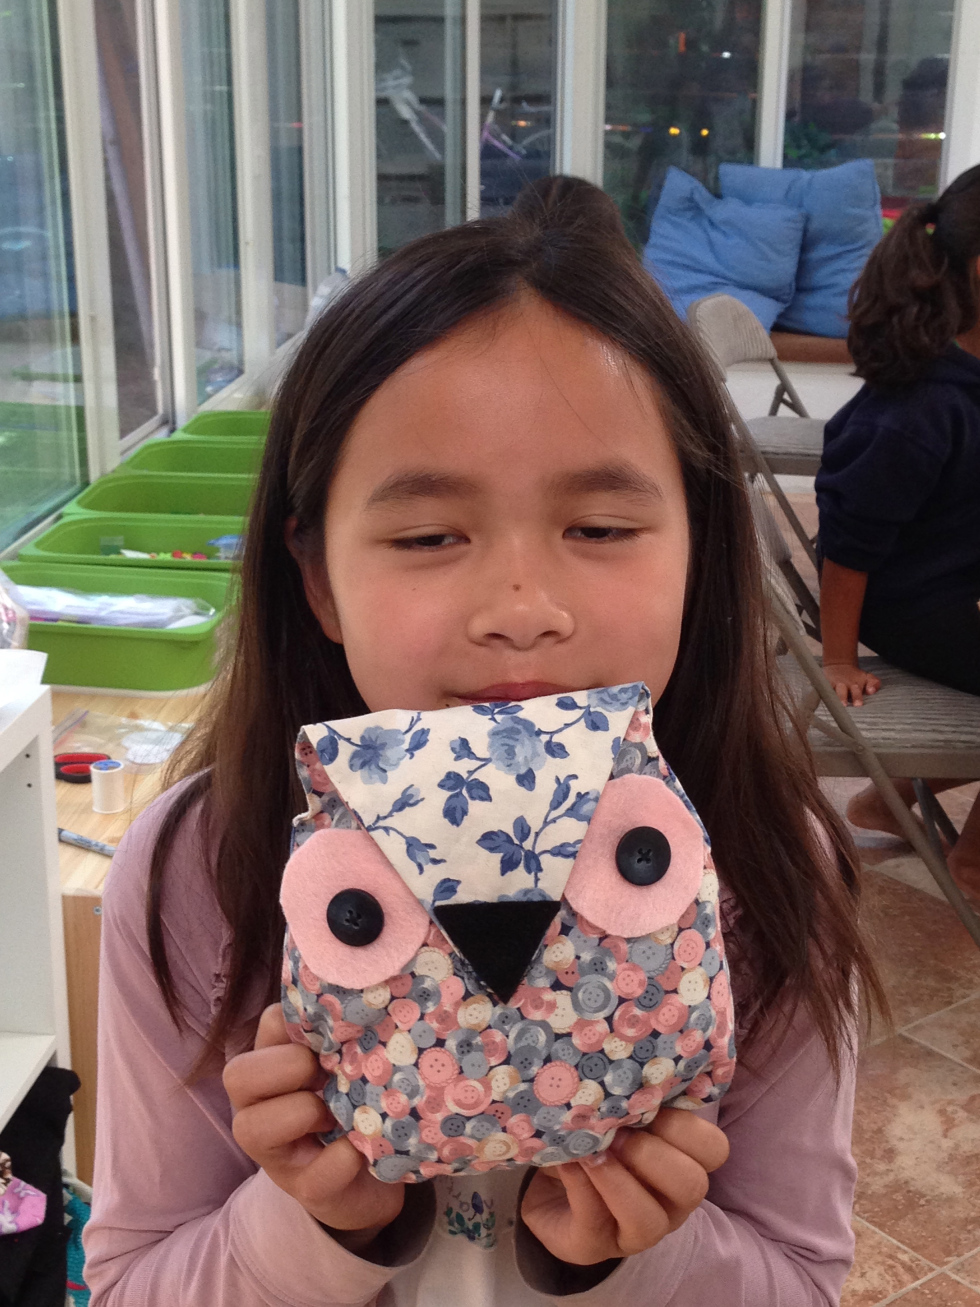  4th grader owl pillow. 